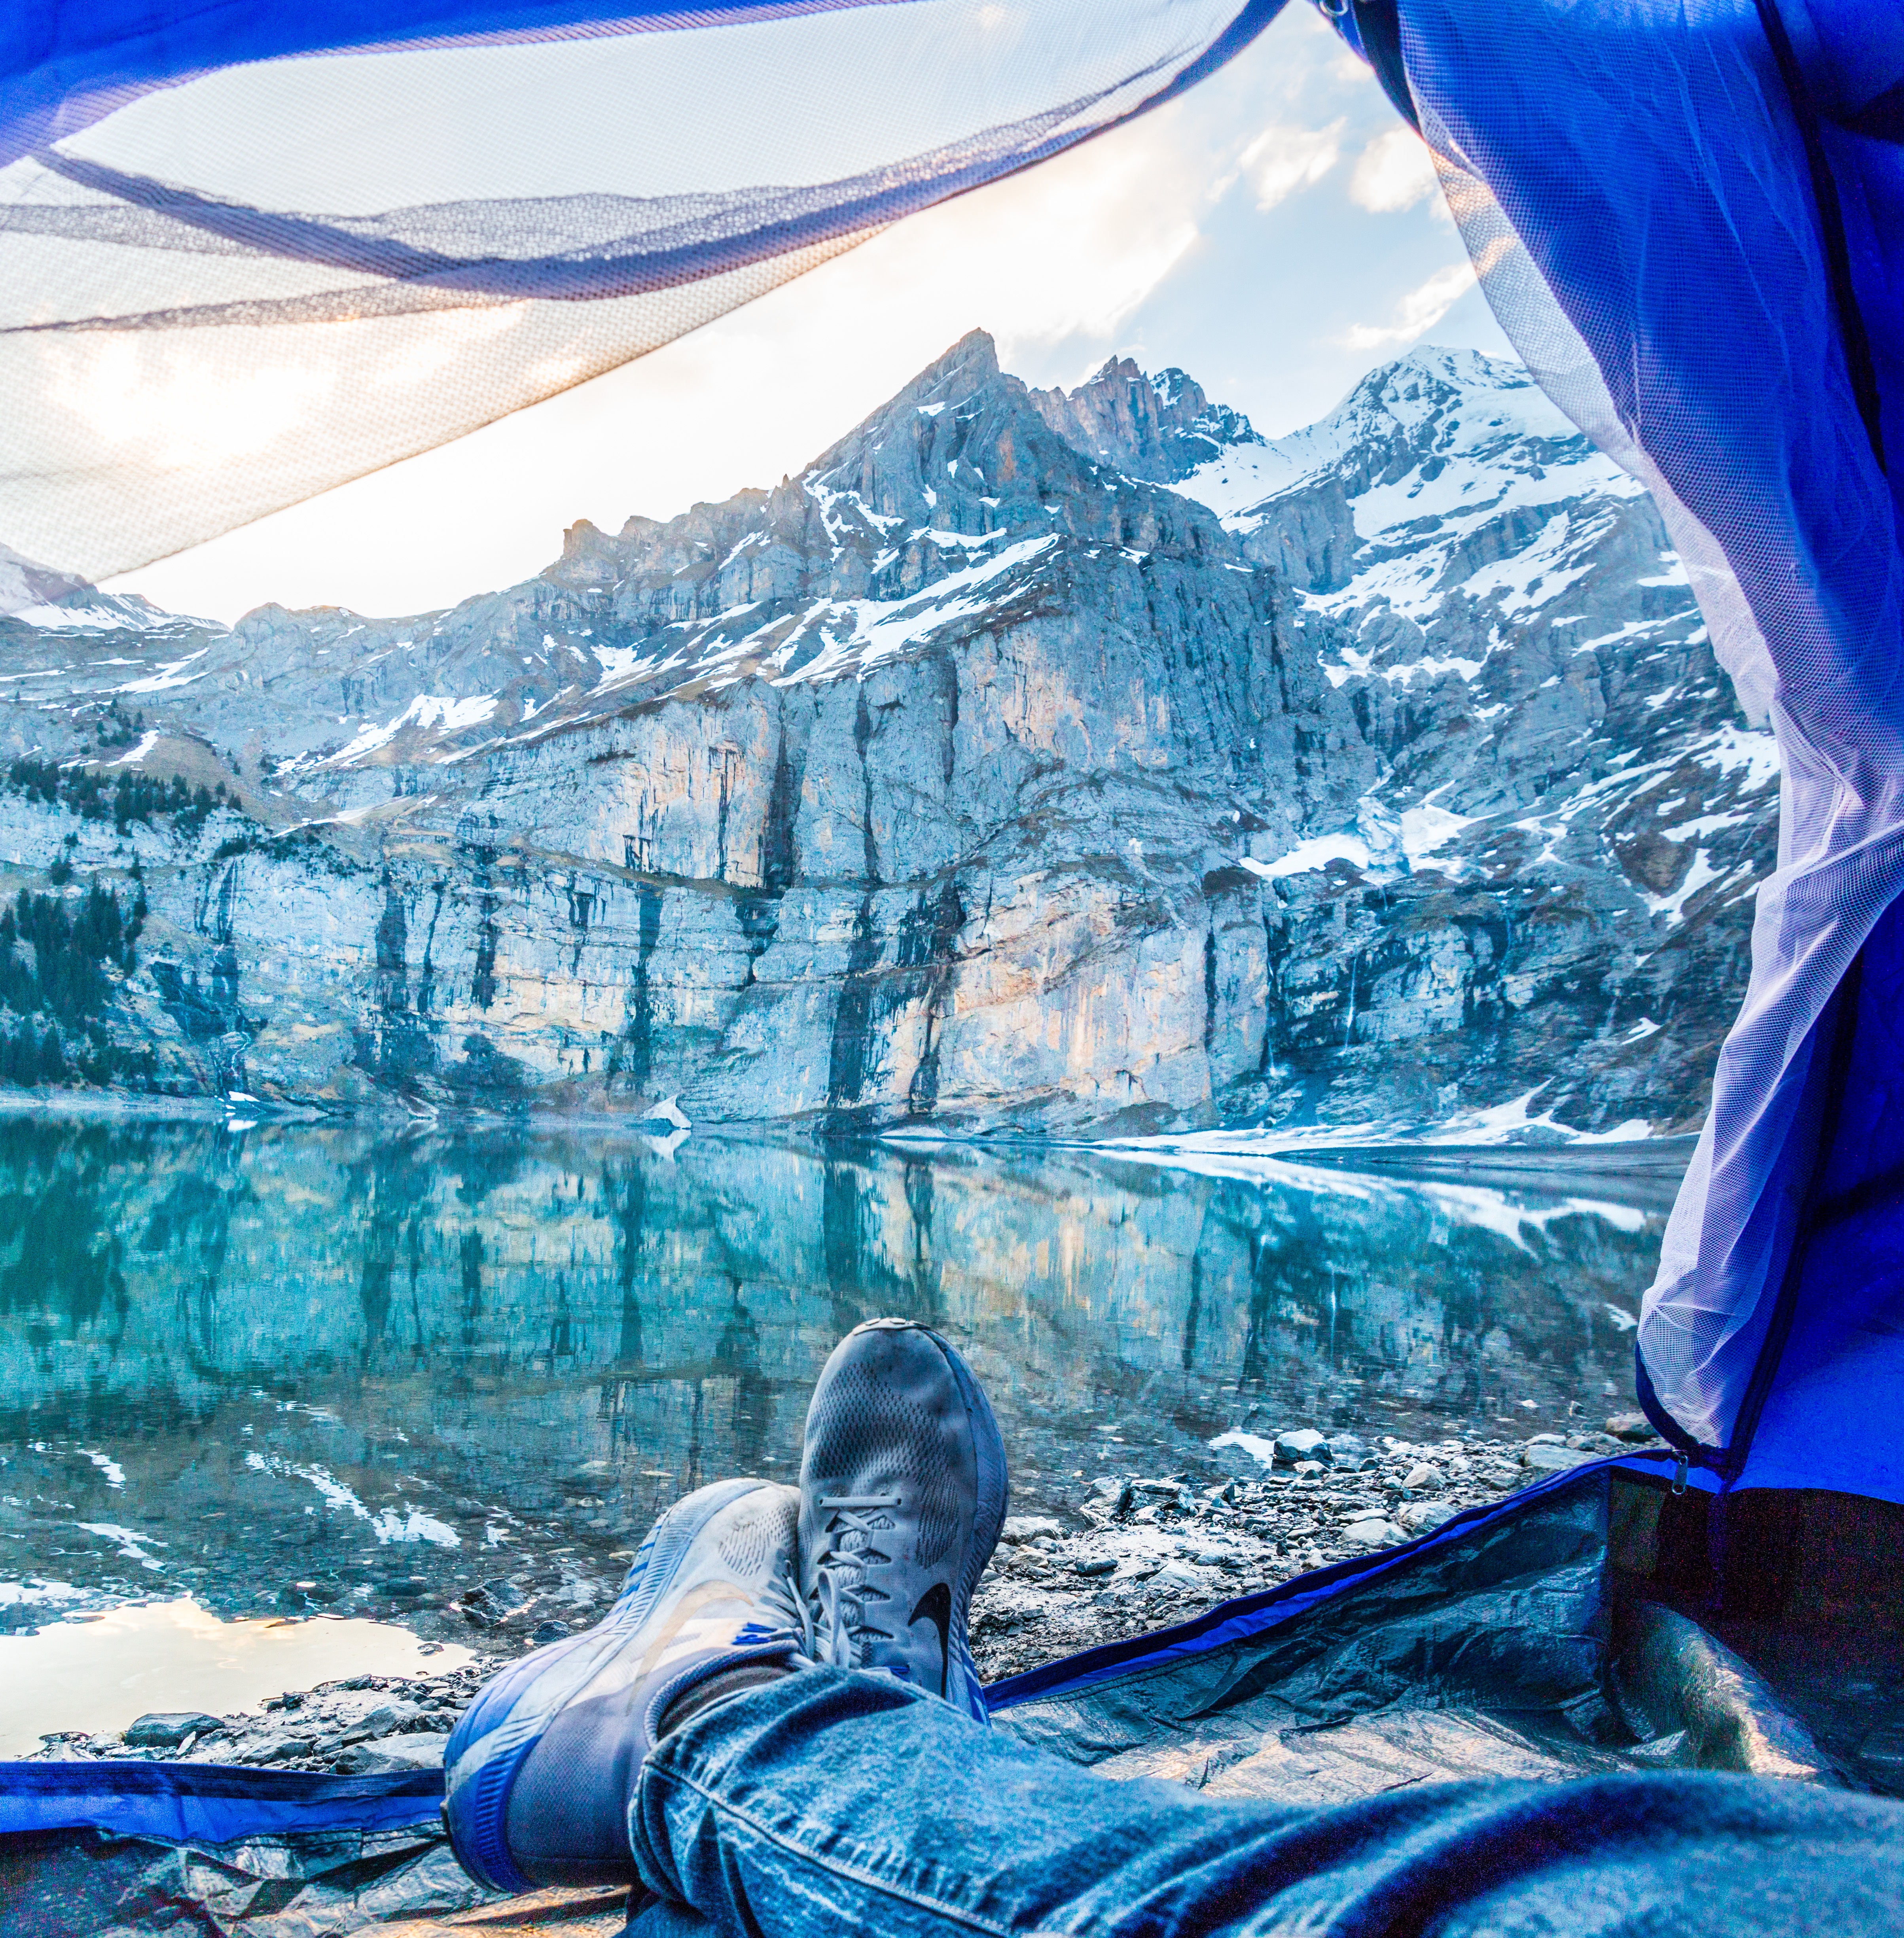 camping, mountains, lake, miscellanea, miscellaneous, legs, tent, campsite, tourism